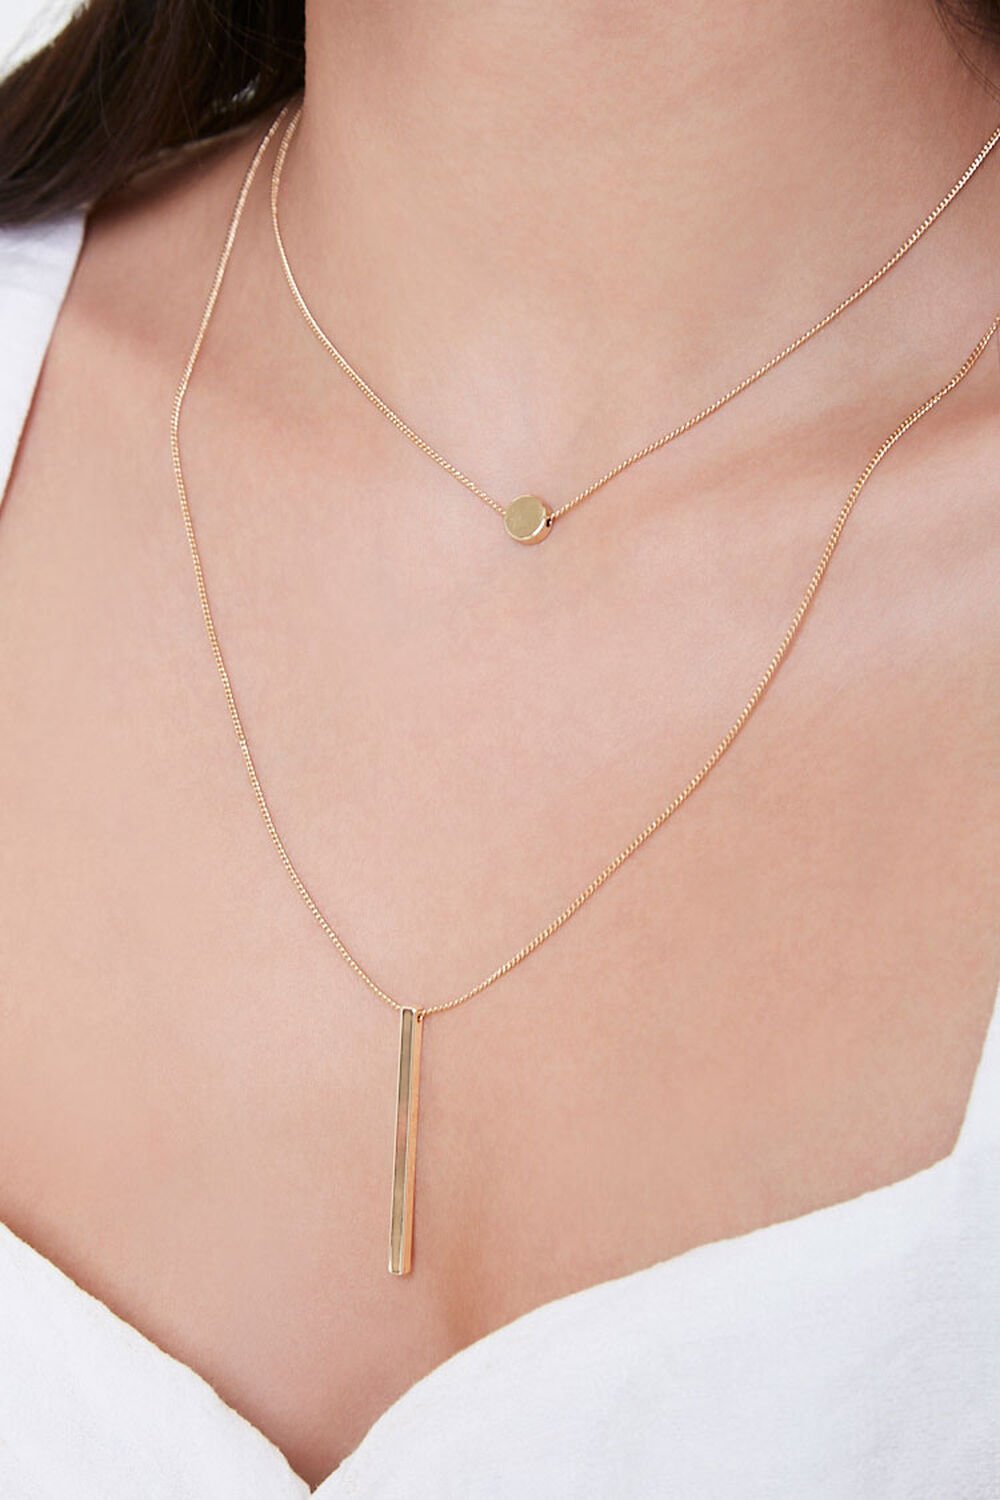 GOLD Bar Drop Layered Necklace, image 1